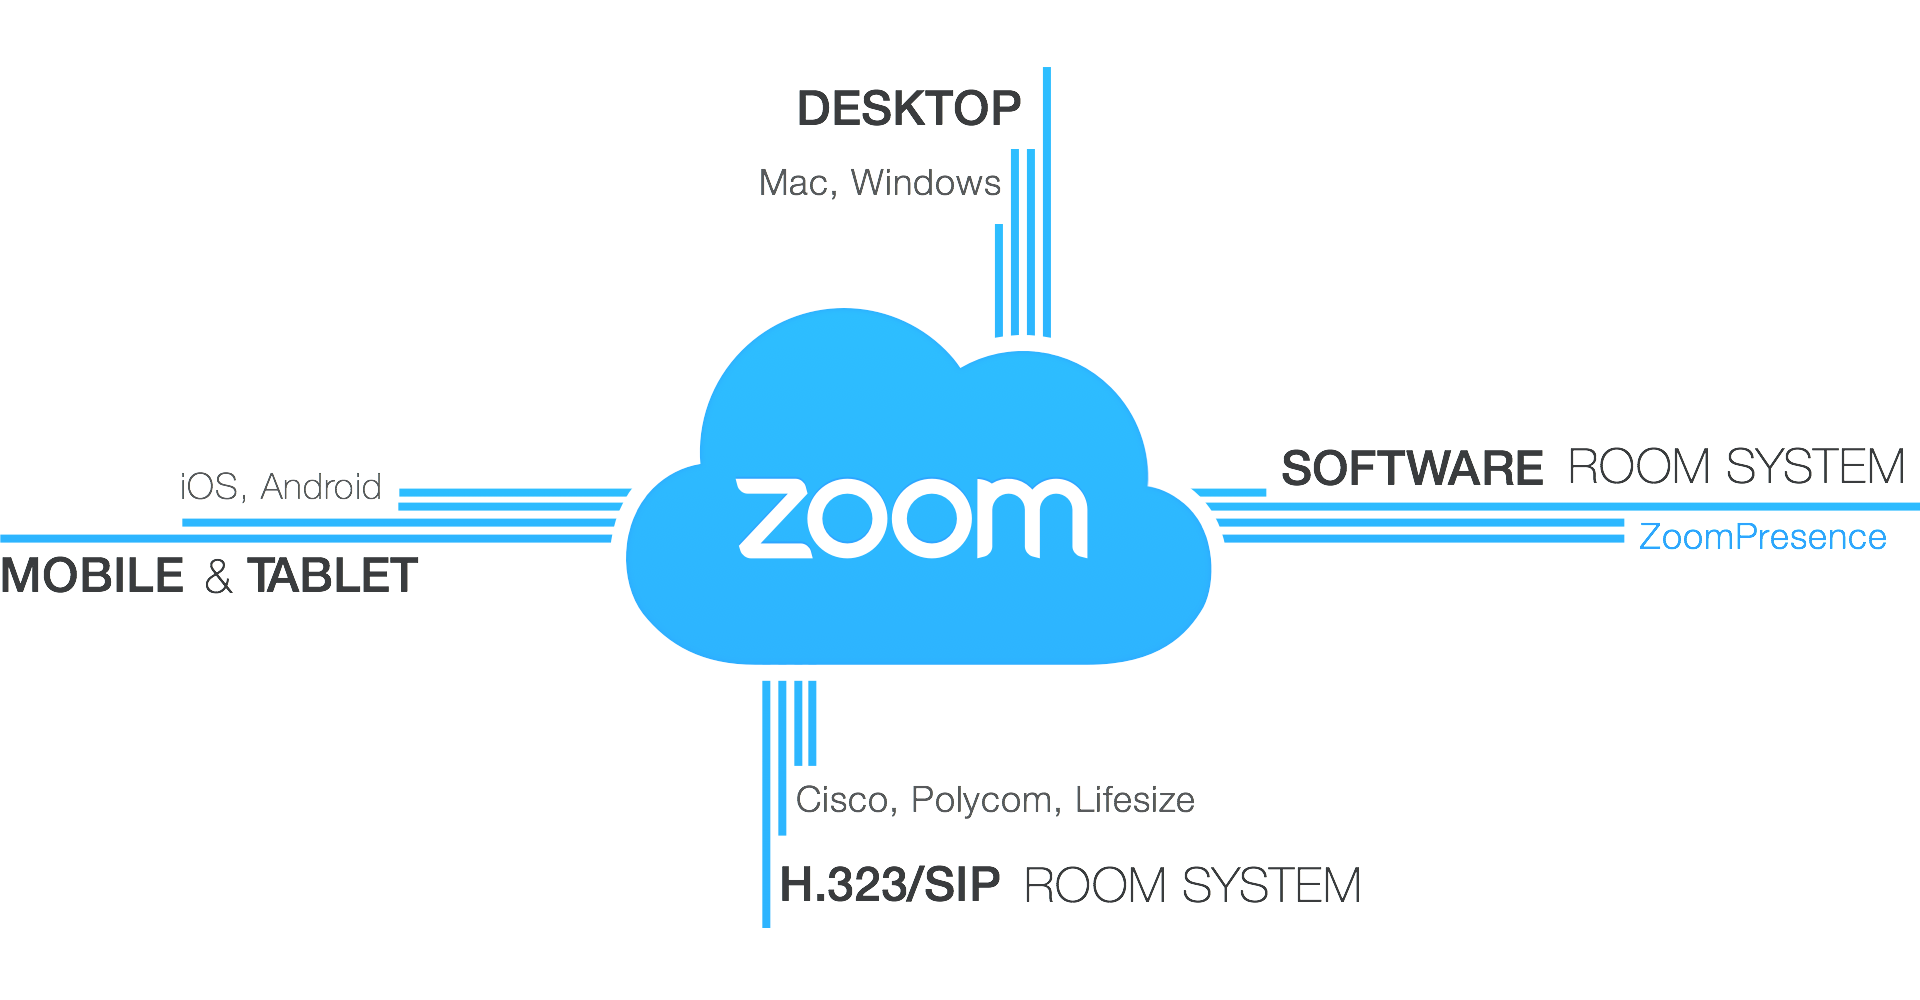 zoom cloud meeting for desktop